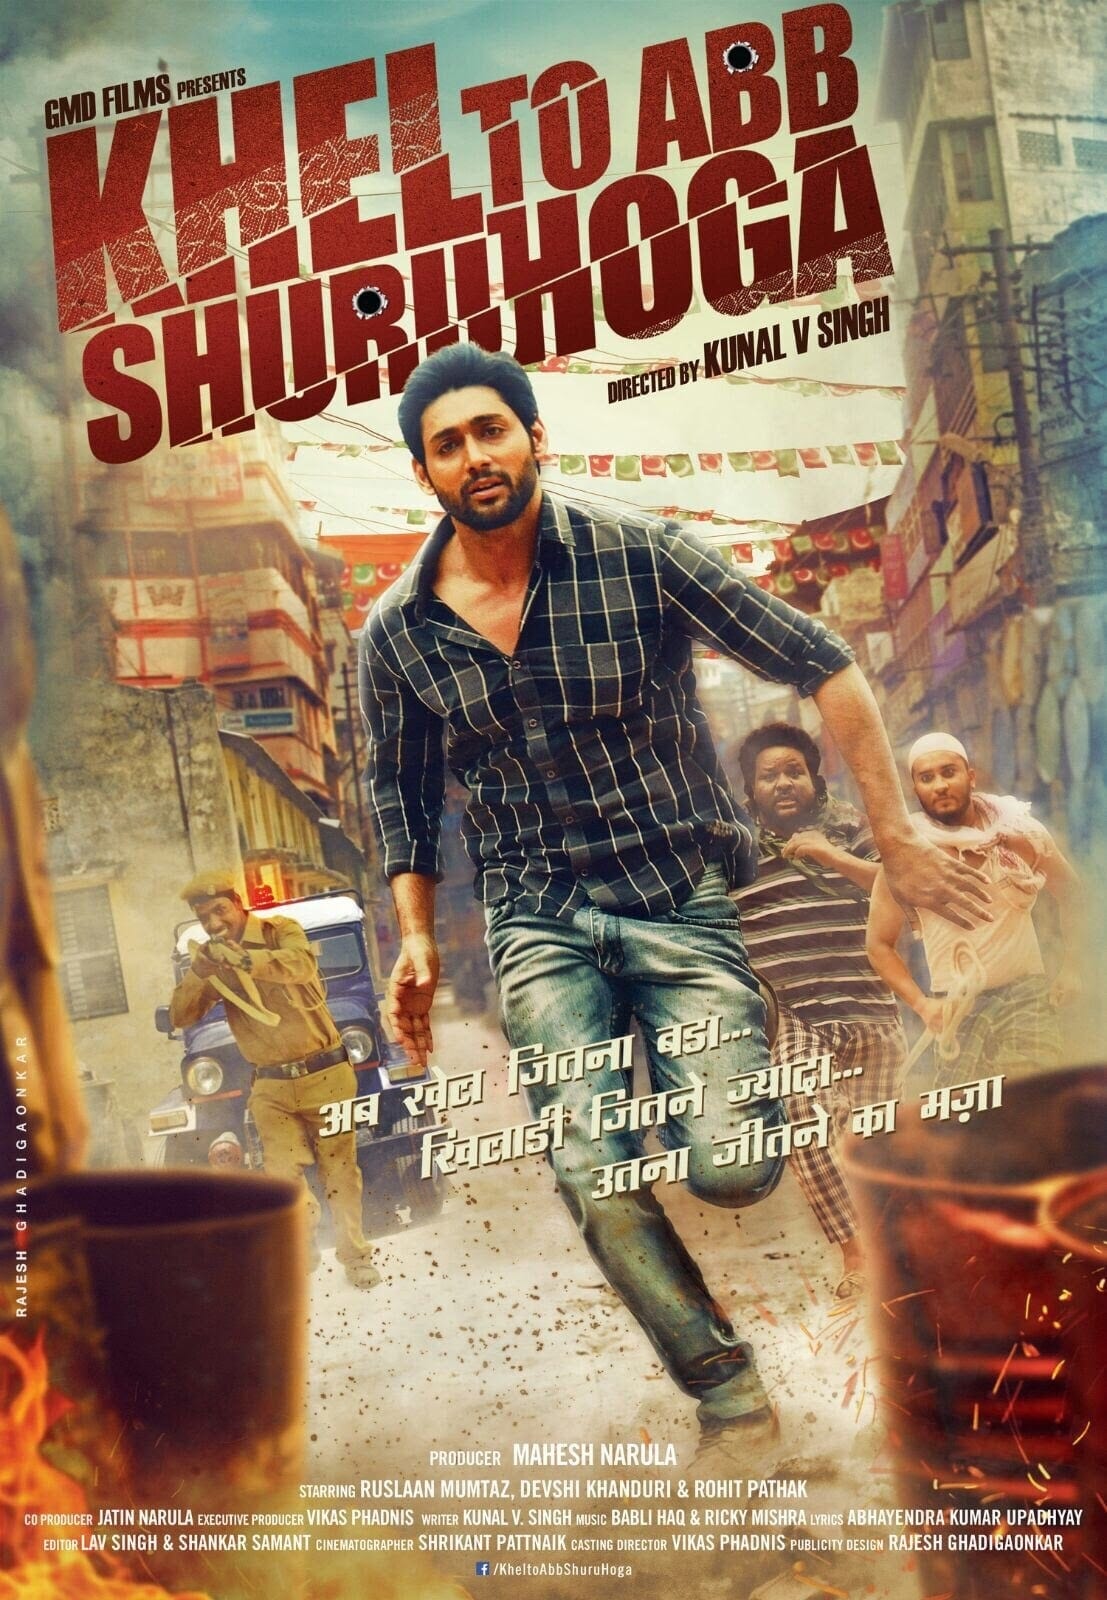 Poster for the movie "Khel Toh Ab Shuru Hoga"